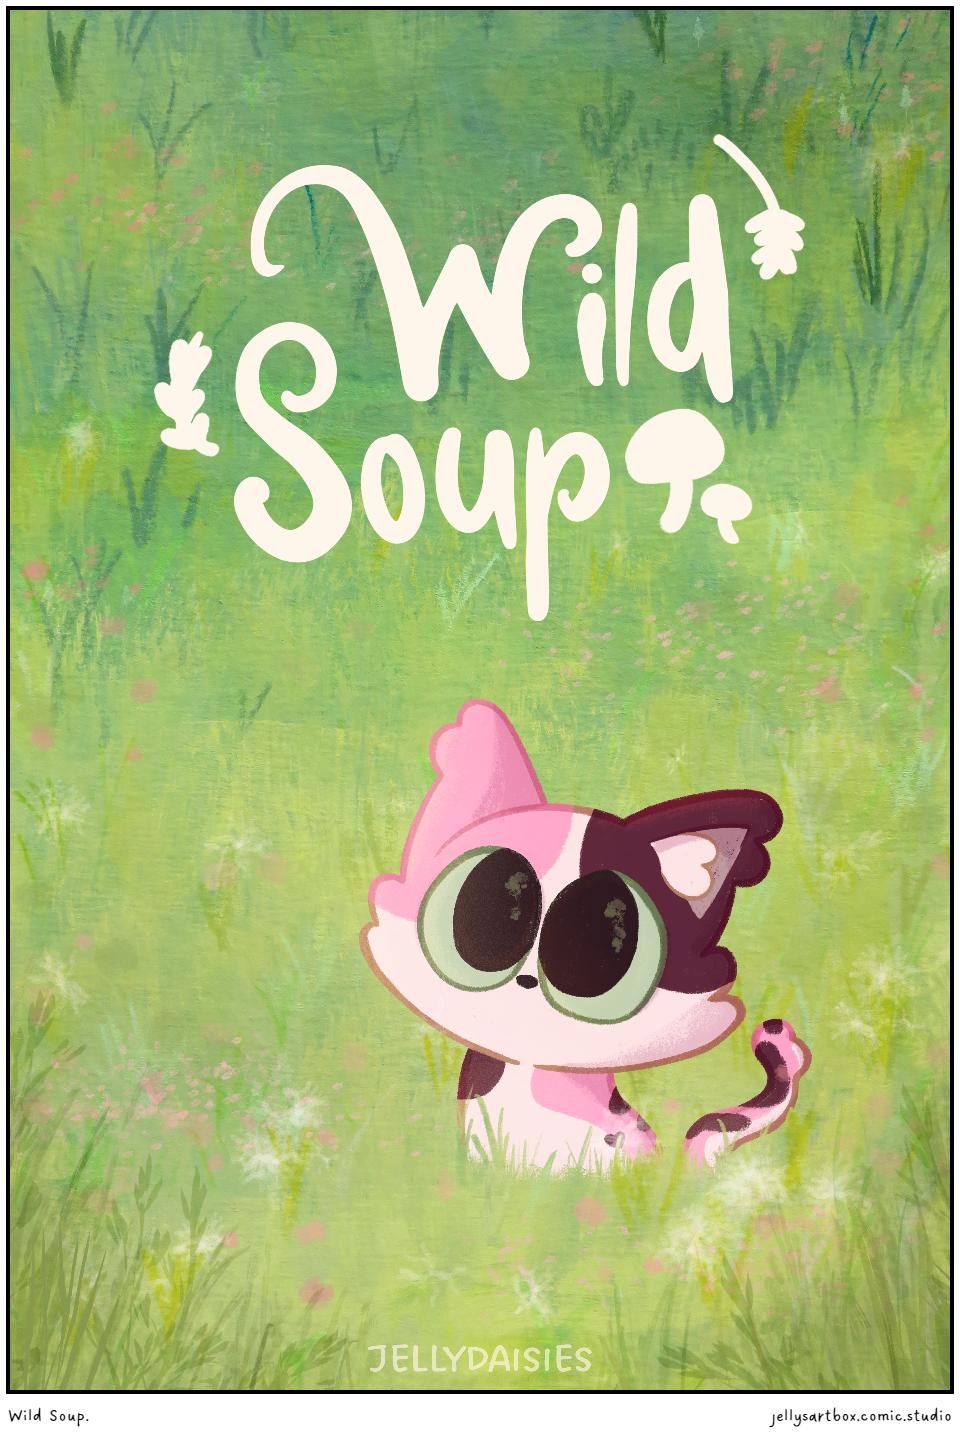 Wild Soup.